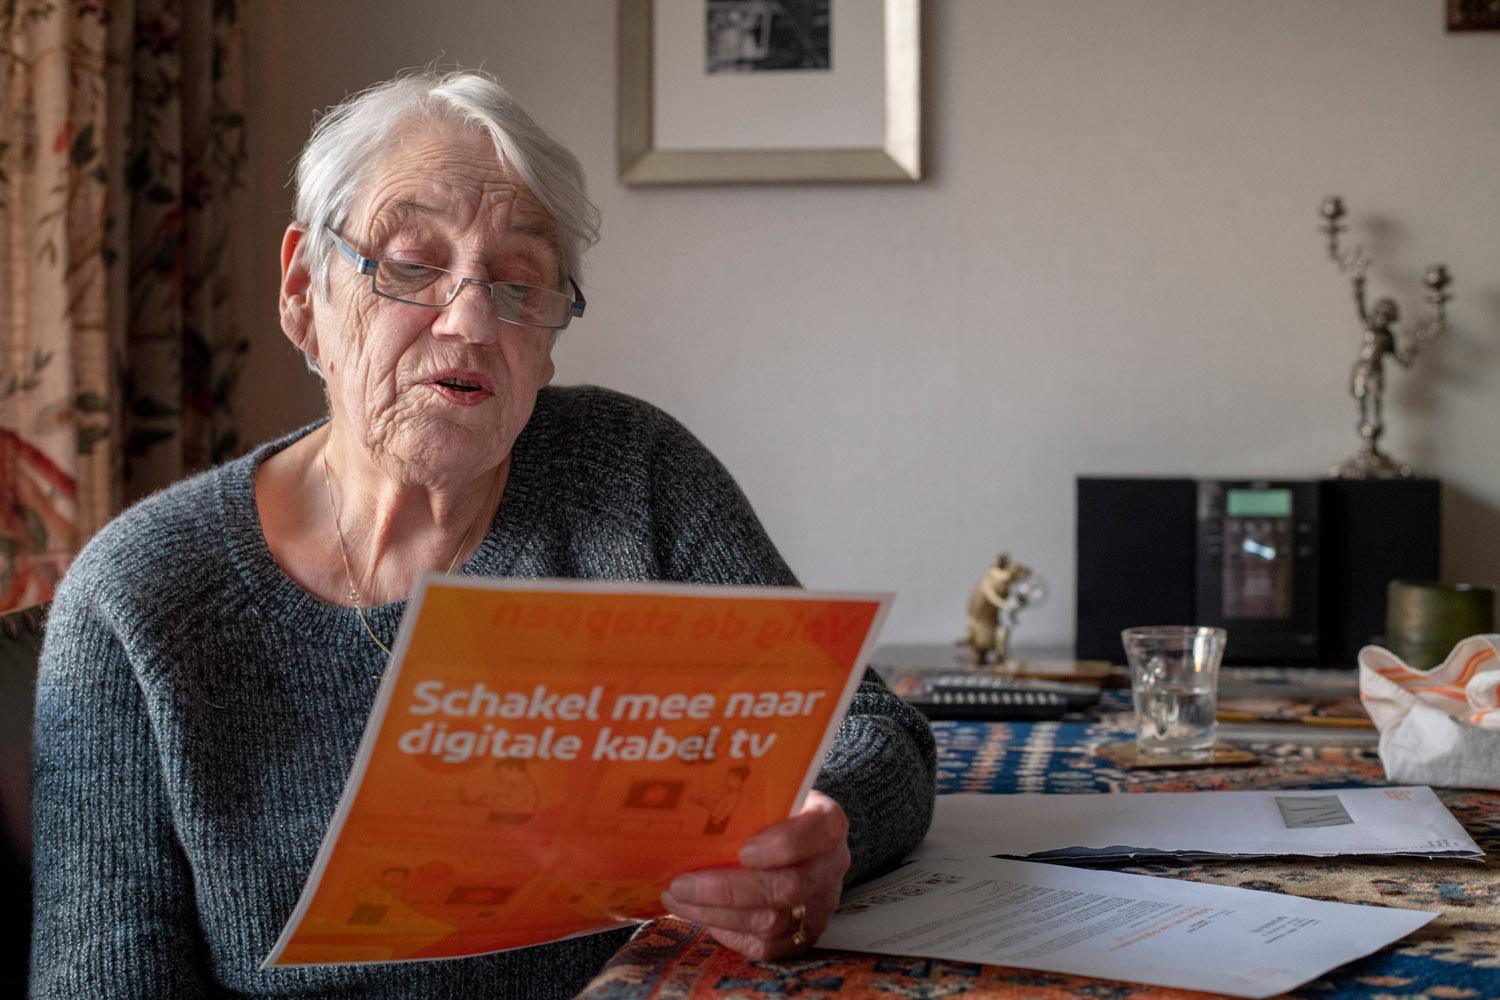 ouderen en digitale televisie - Nederland - Oudere dame betreedt het digitale tijdperk. foto: Patricia Rehe / Hollandse Hoogte